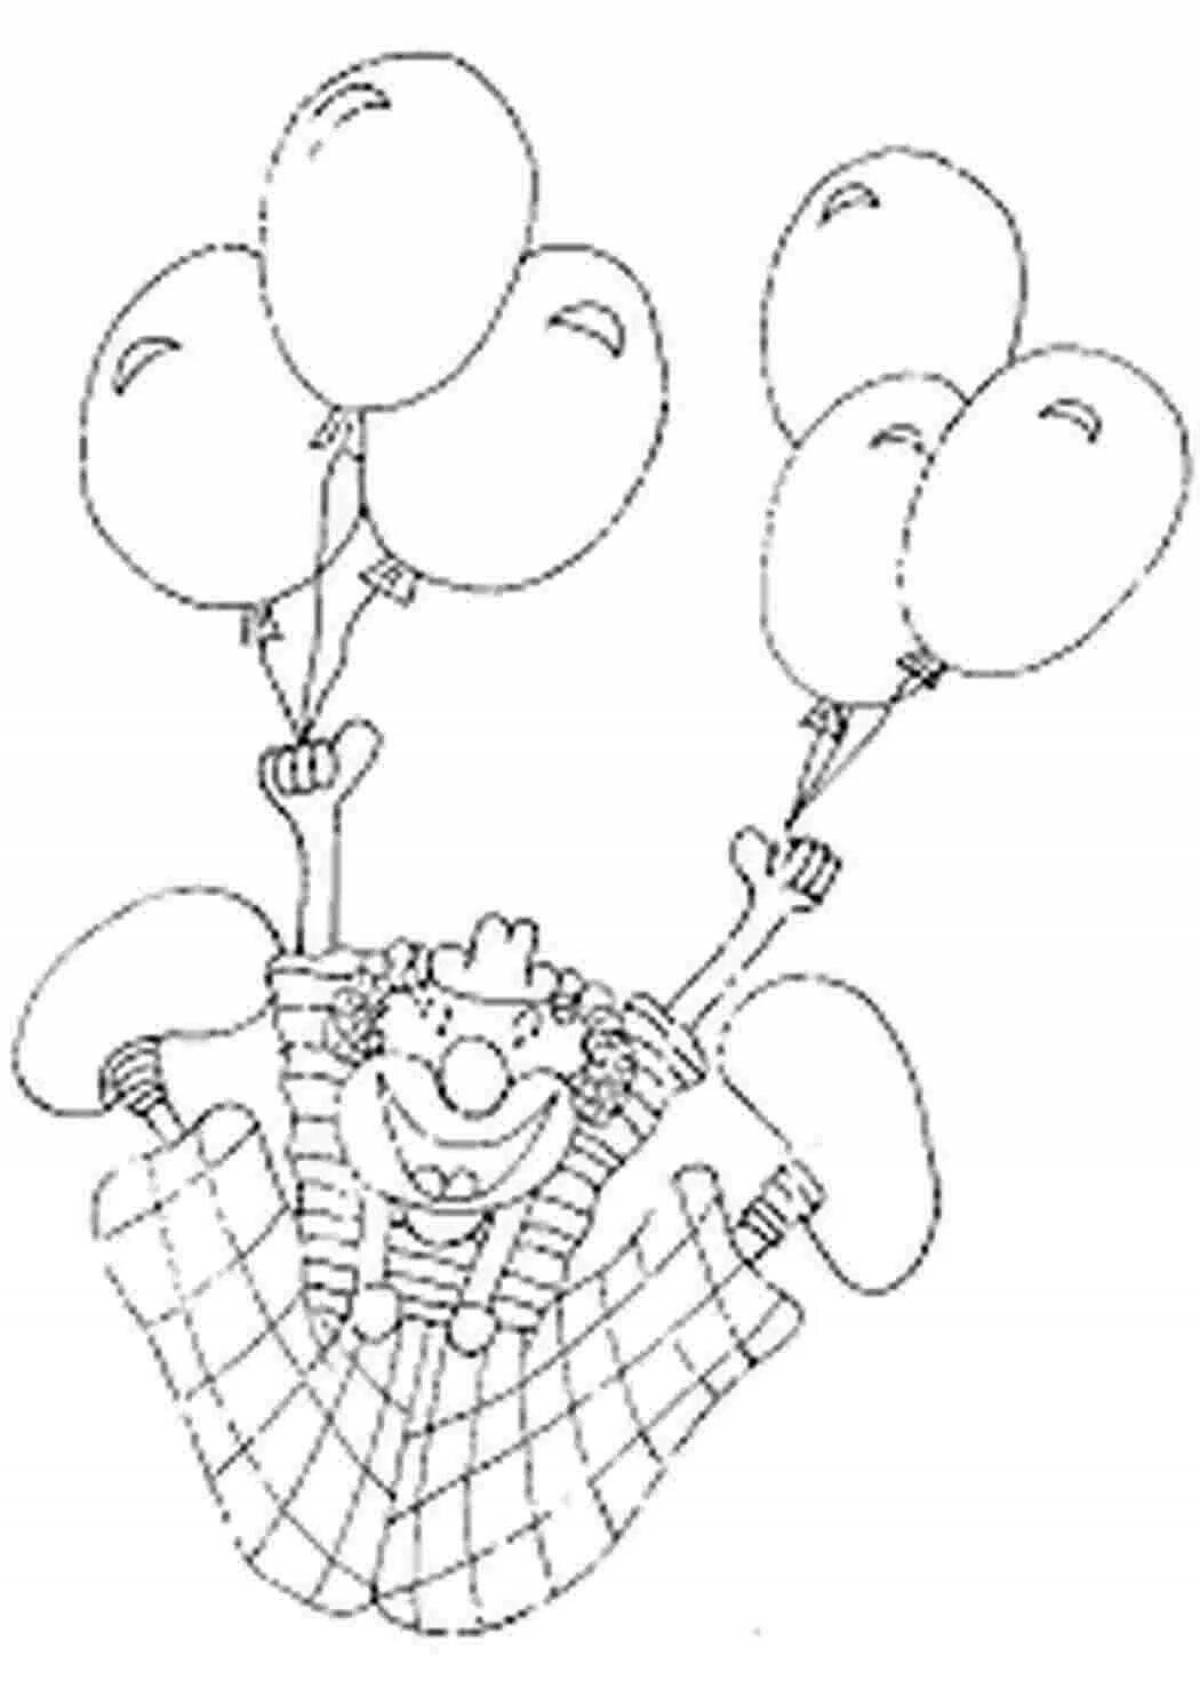 Noisy clown with balloons